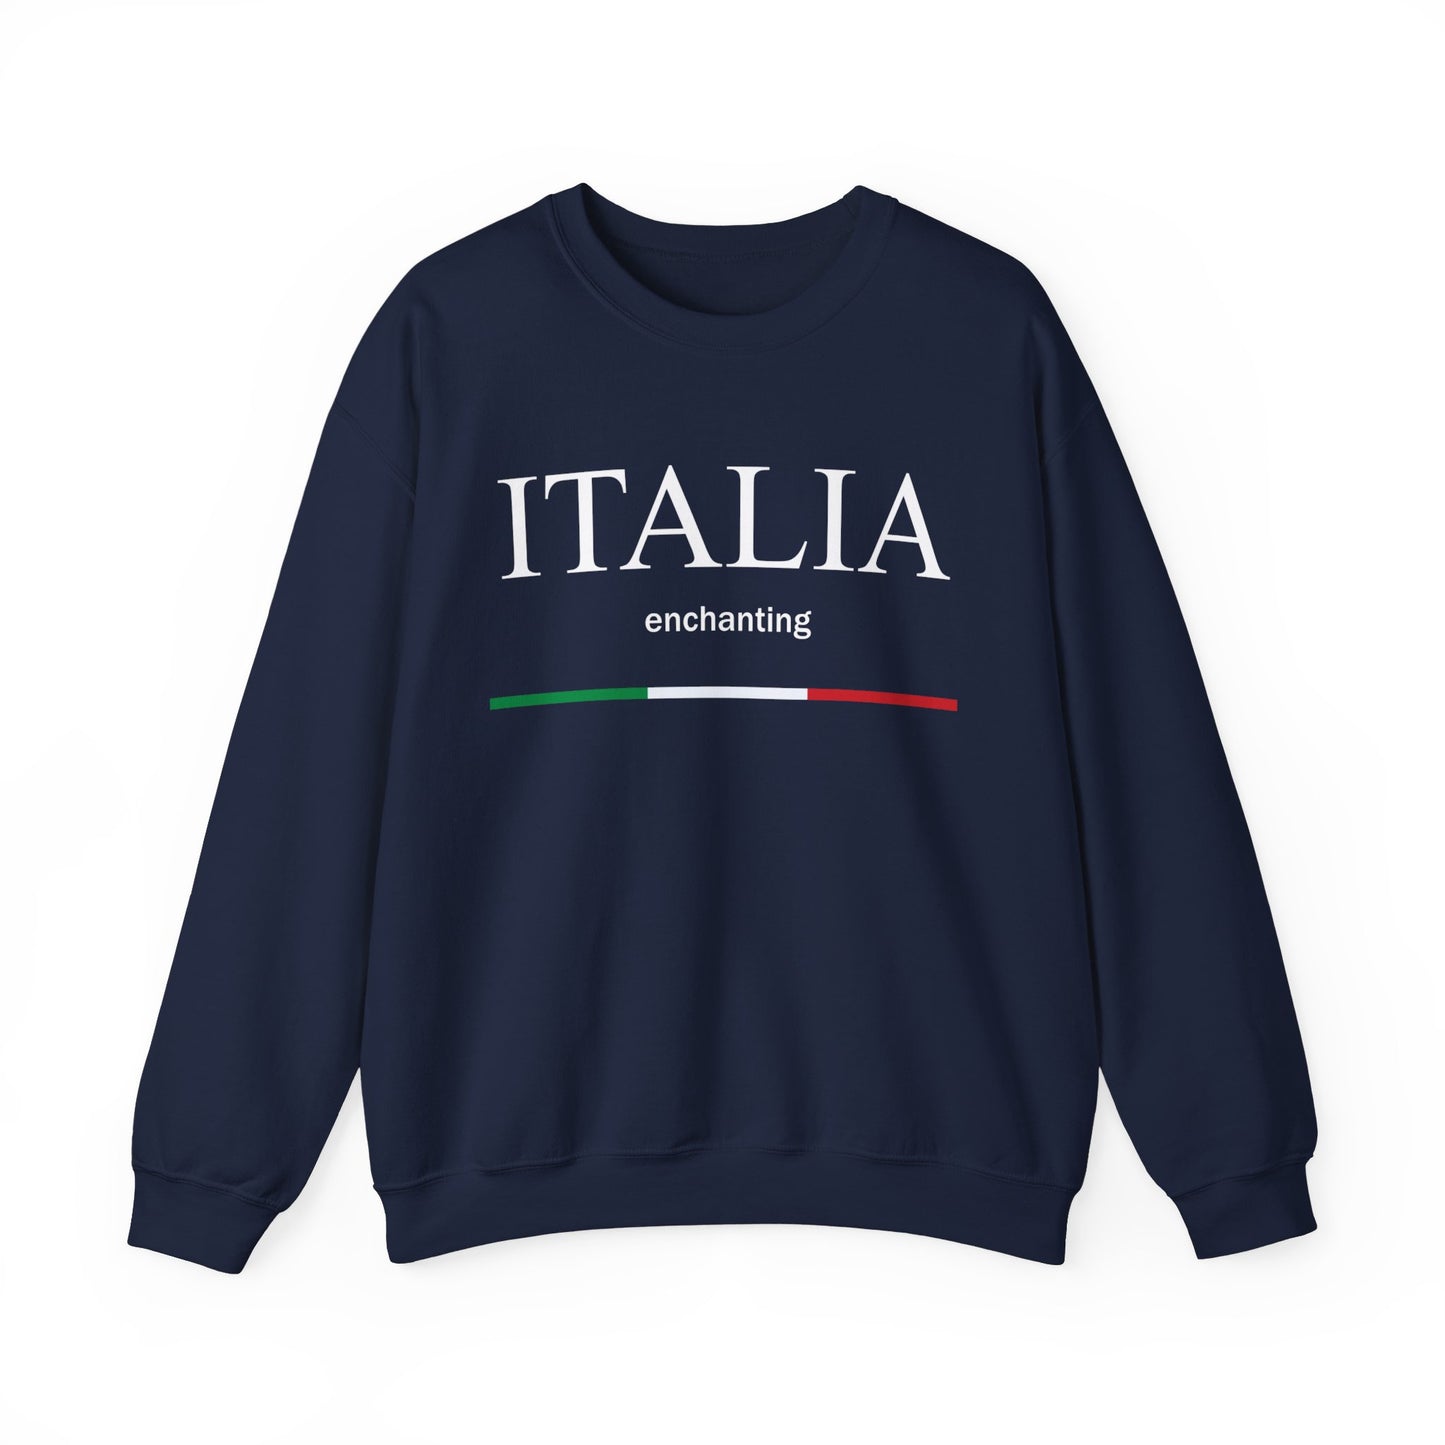 Italia Sweatshirt, Italy sweater, Travel Italy Sweatshirt, Italy Gift Idea, Italy Lover Sweater, Italy Style Sweater, Italy Flag Sweatshirt